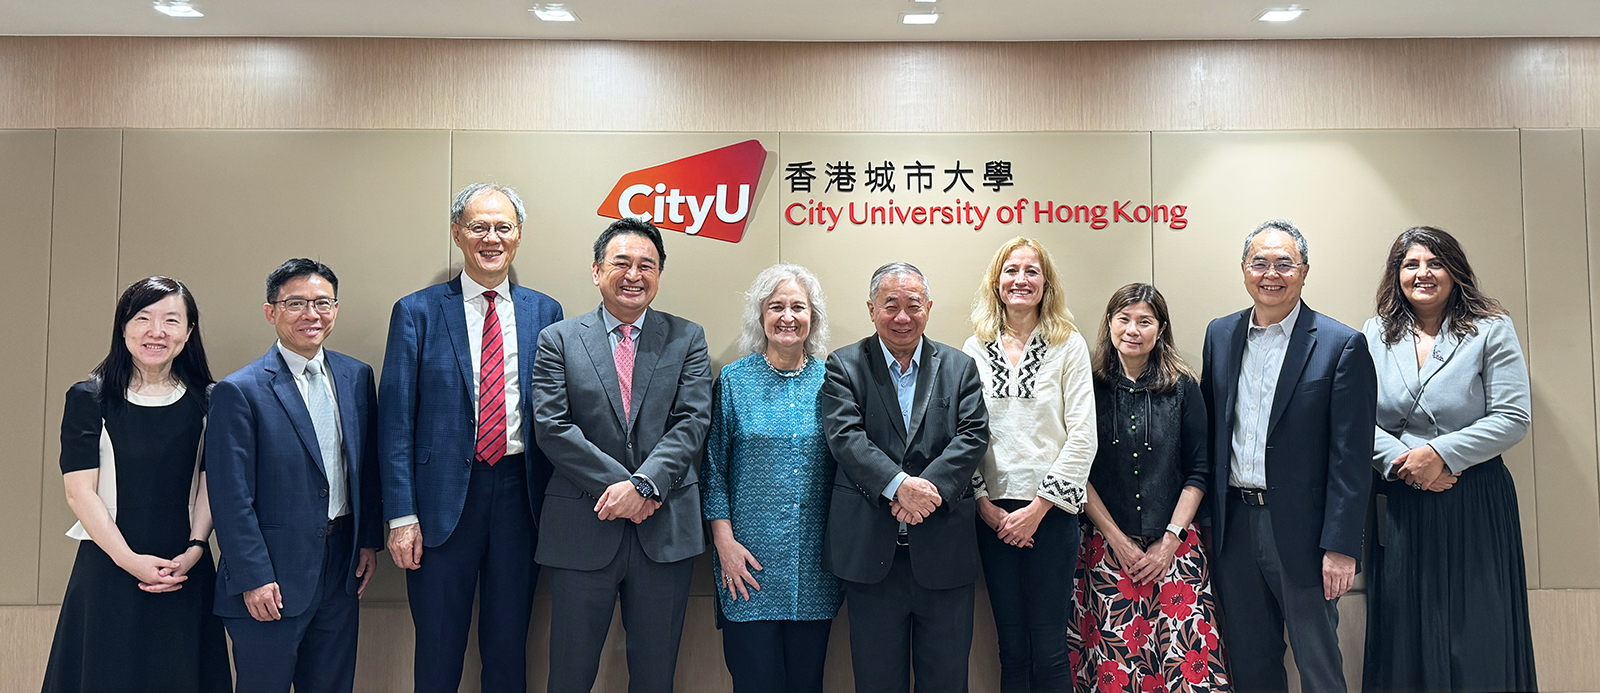 (From left) Professor Dai, Professor Ho, Professor Lin, Professor Li, Professor Gravett, President Boey, Professor Rodny-Gumede, Ms Ng, Professor Yue and Ms Khan.